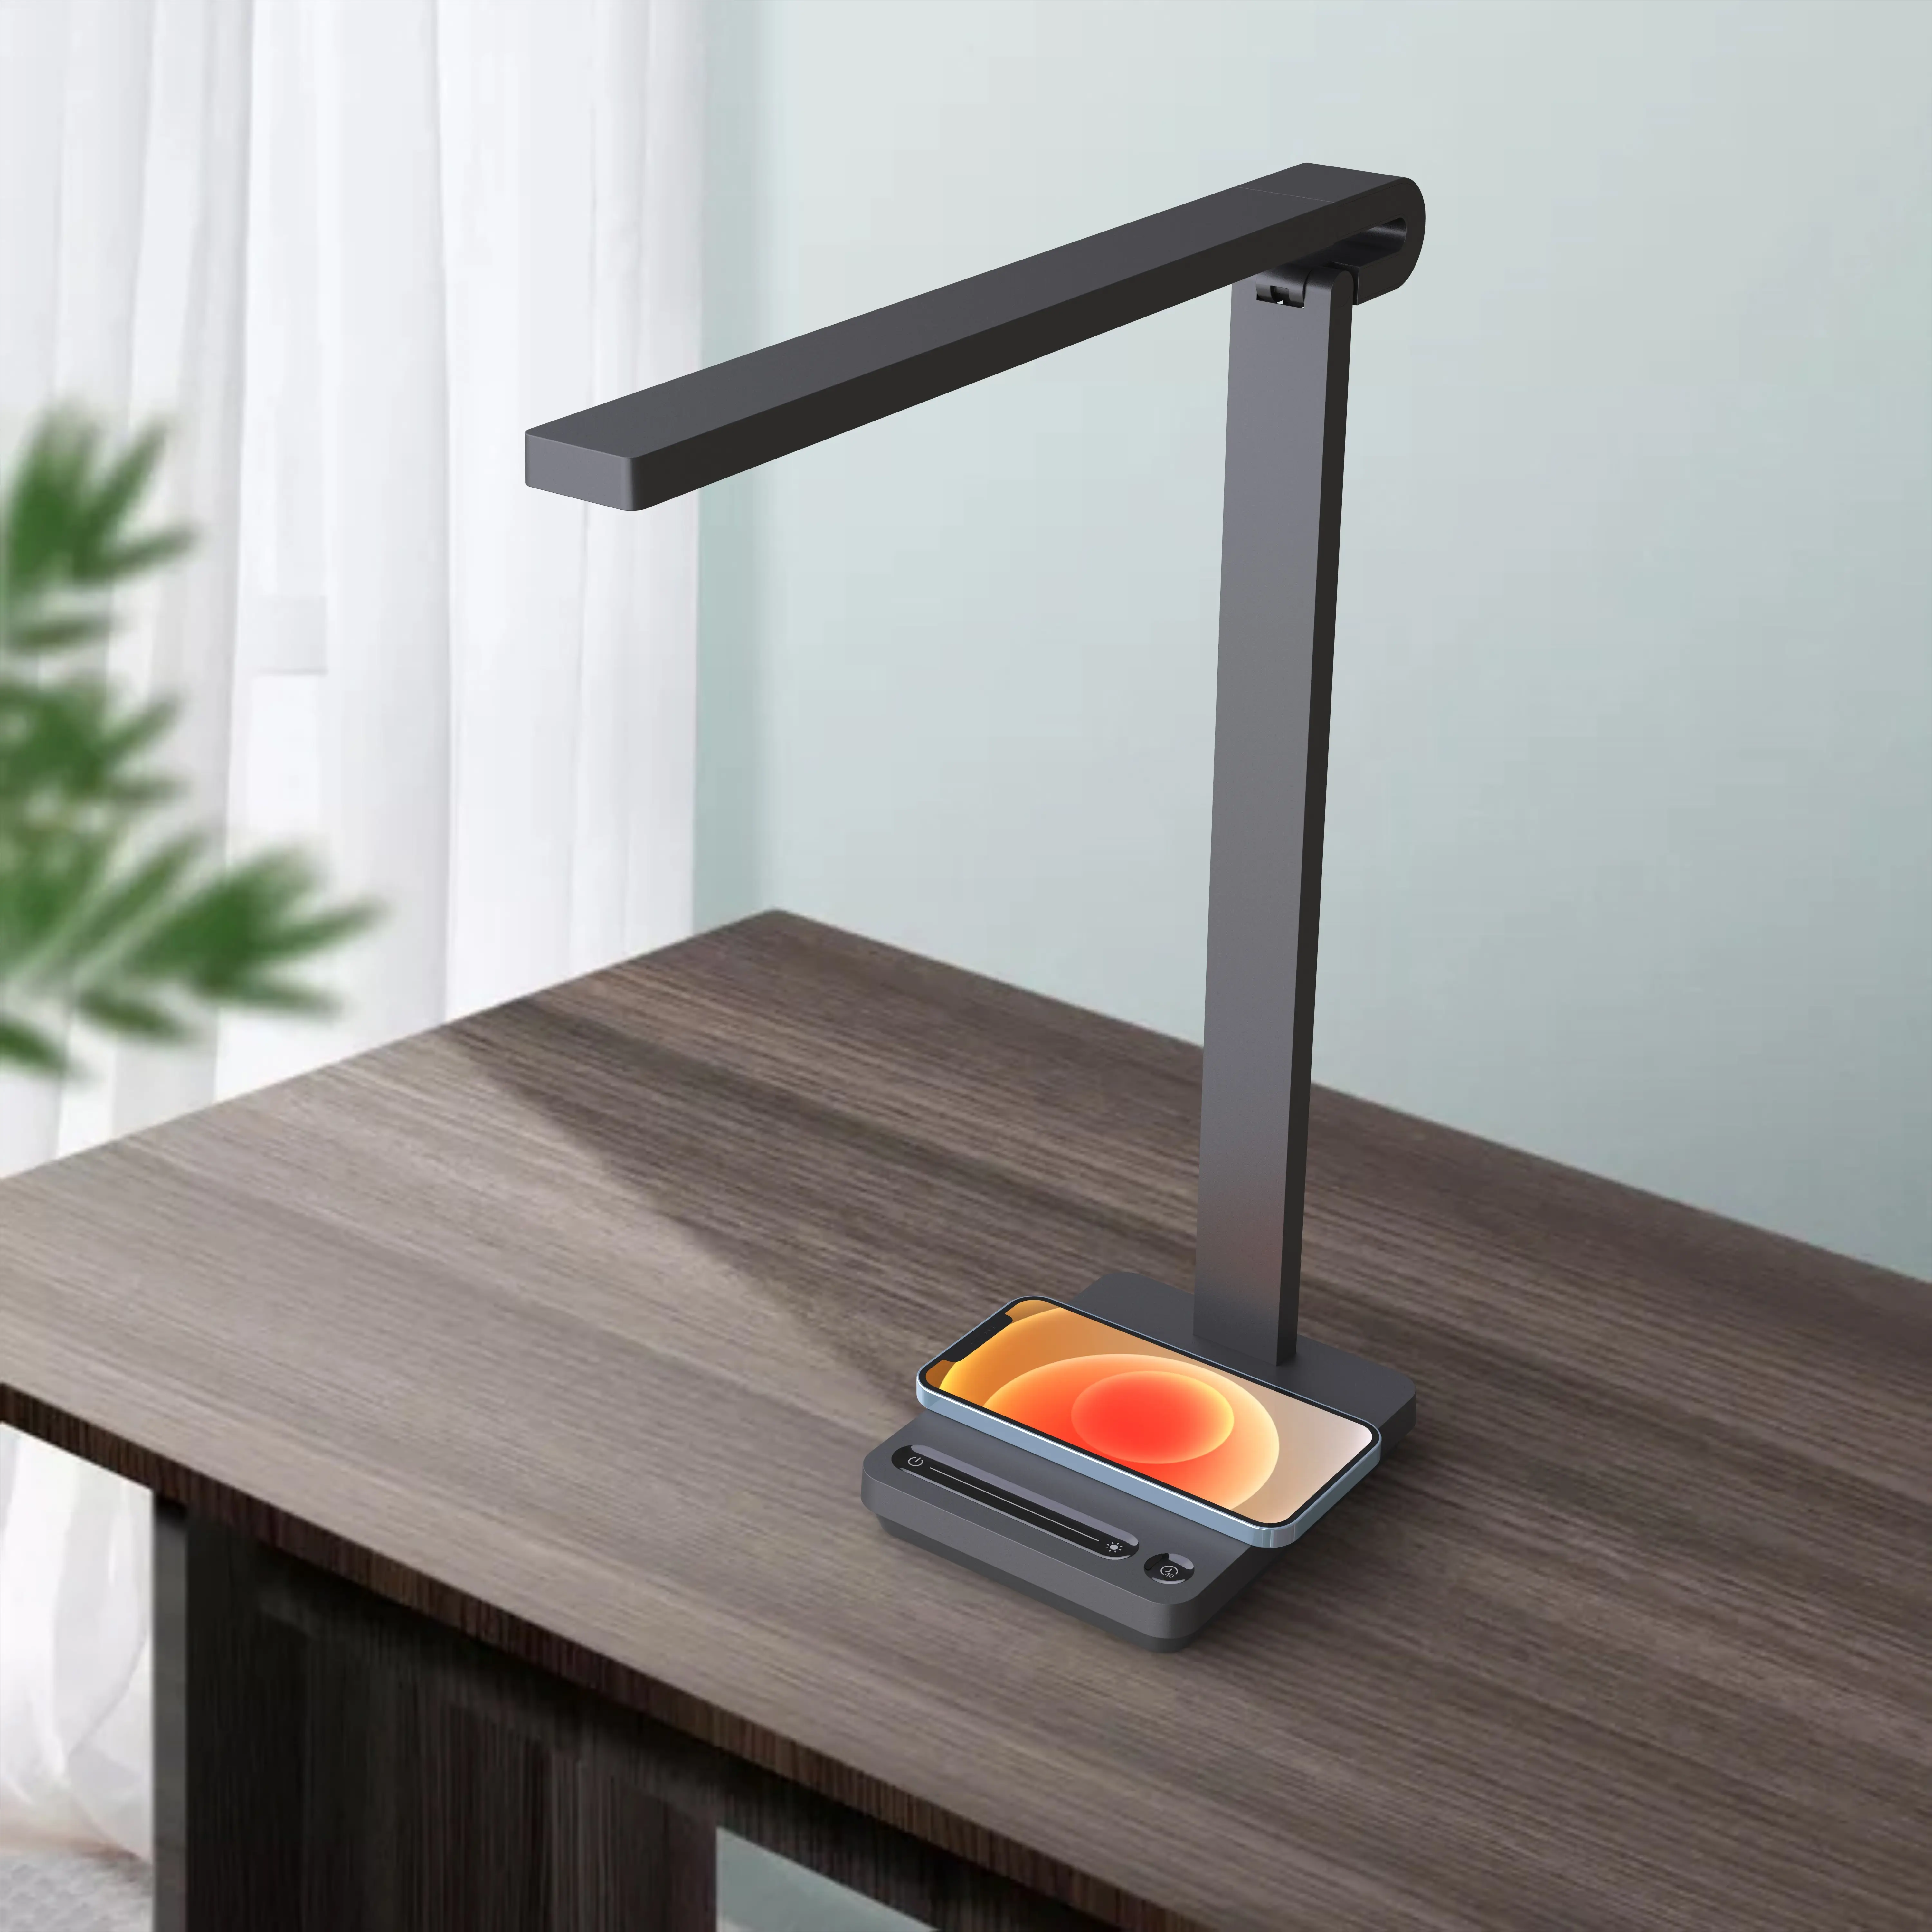 Amazon hot selling foldable led desk lamp wireless charging with USB port